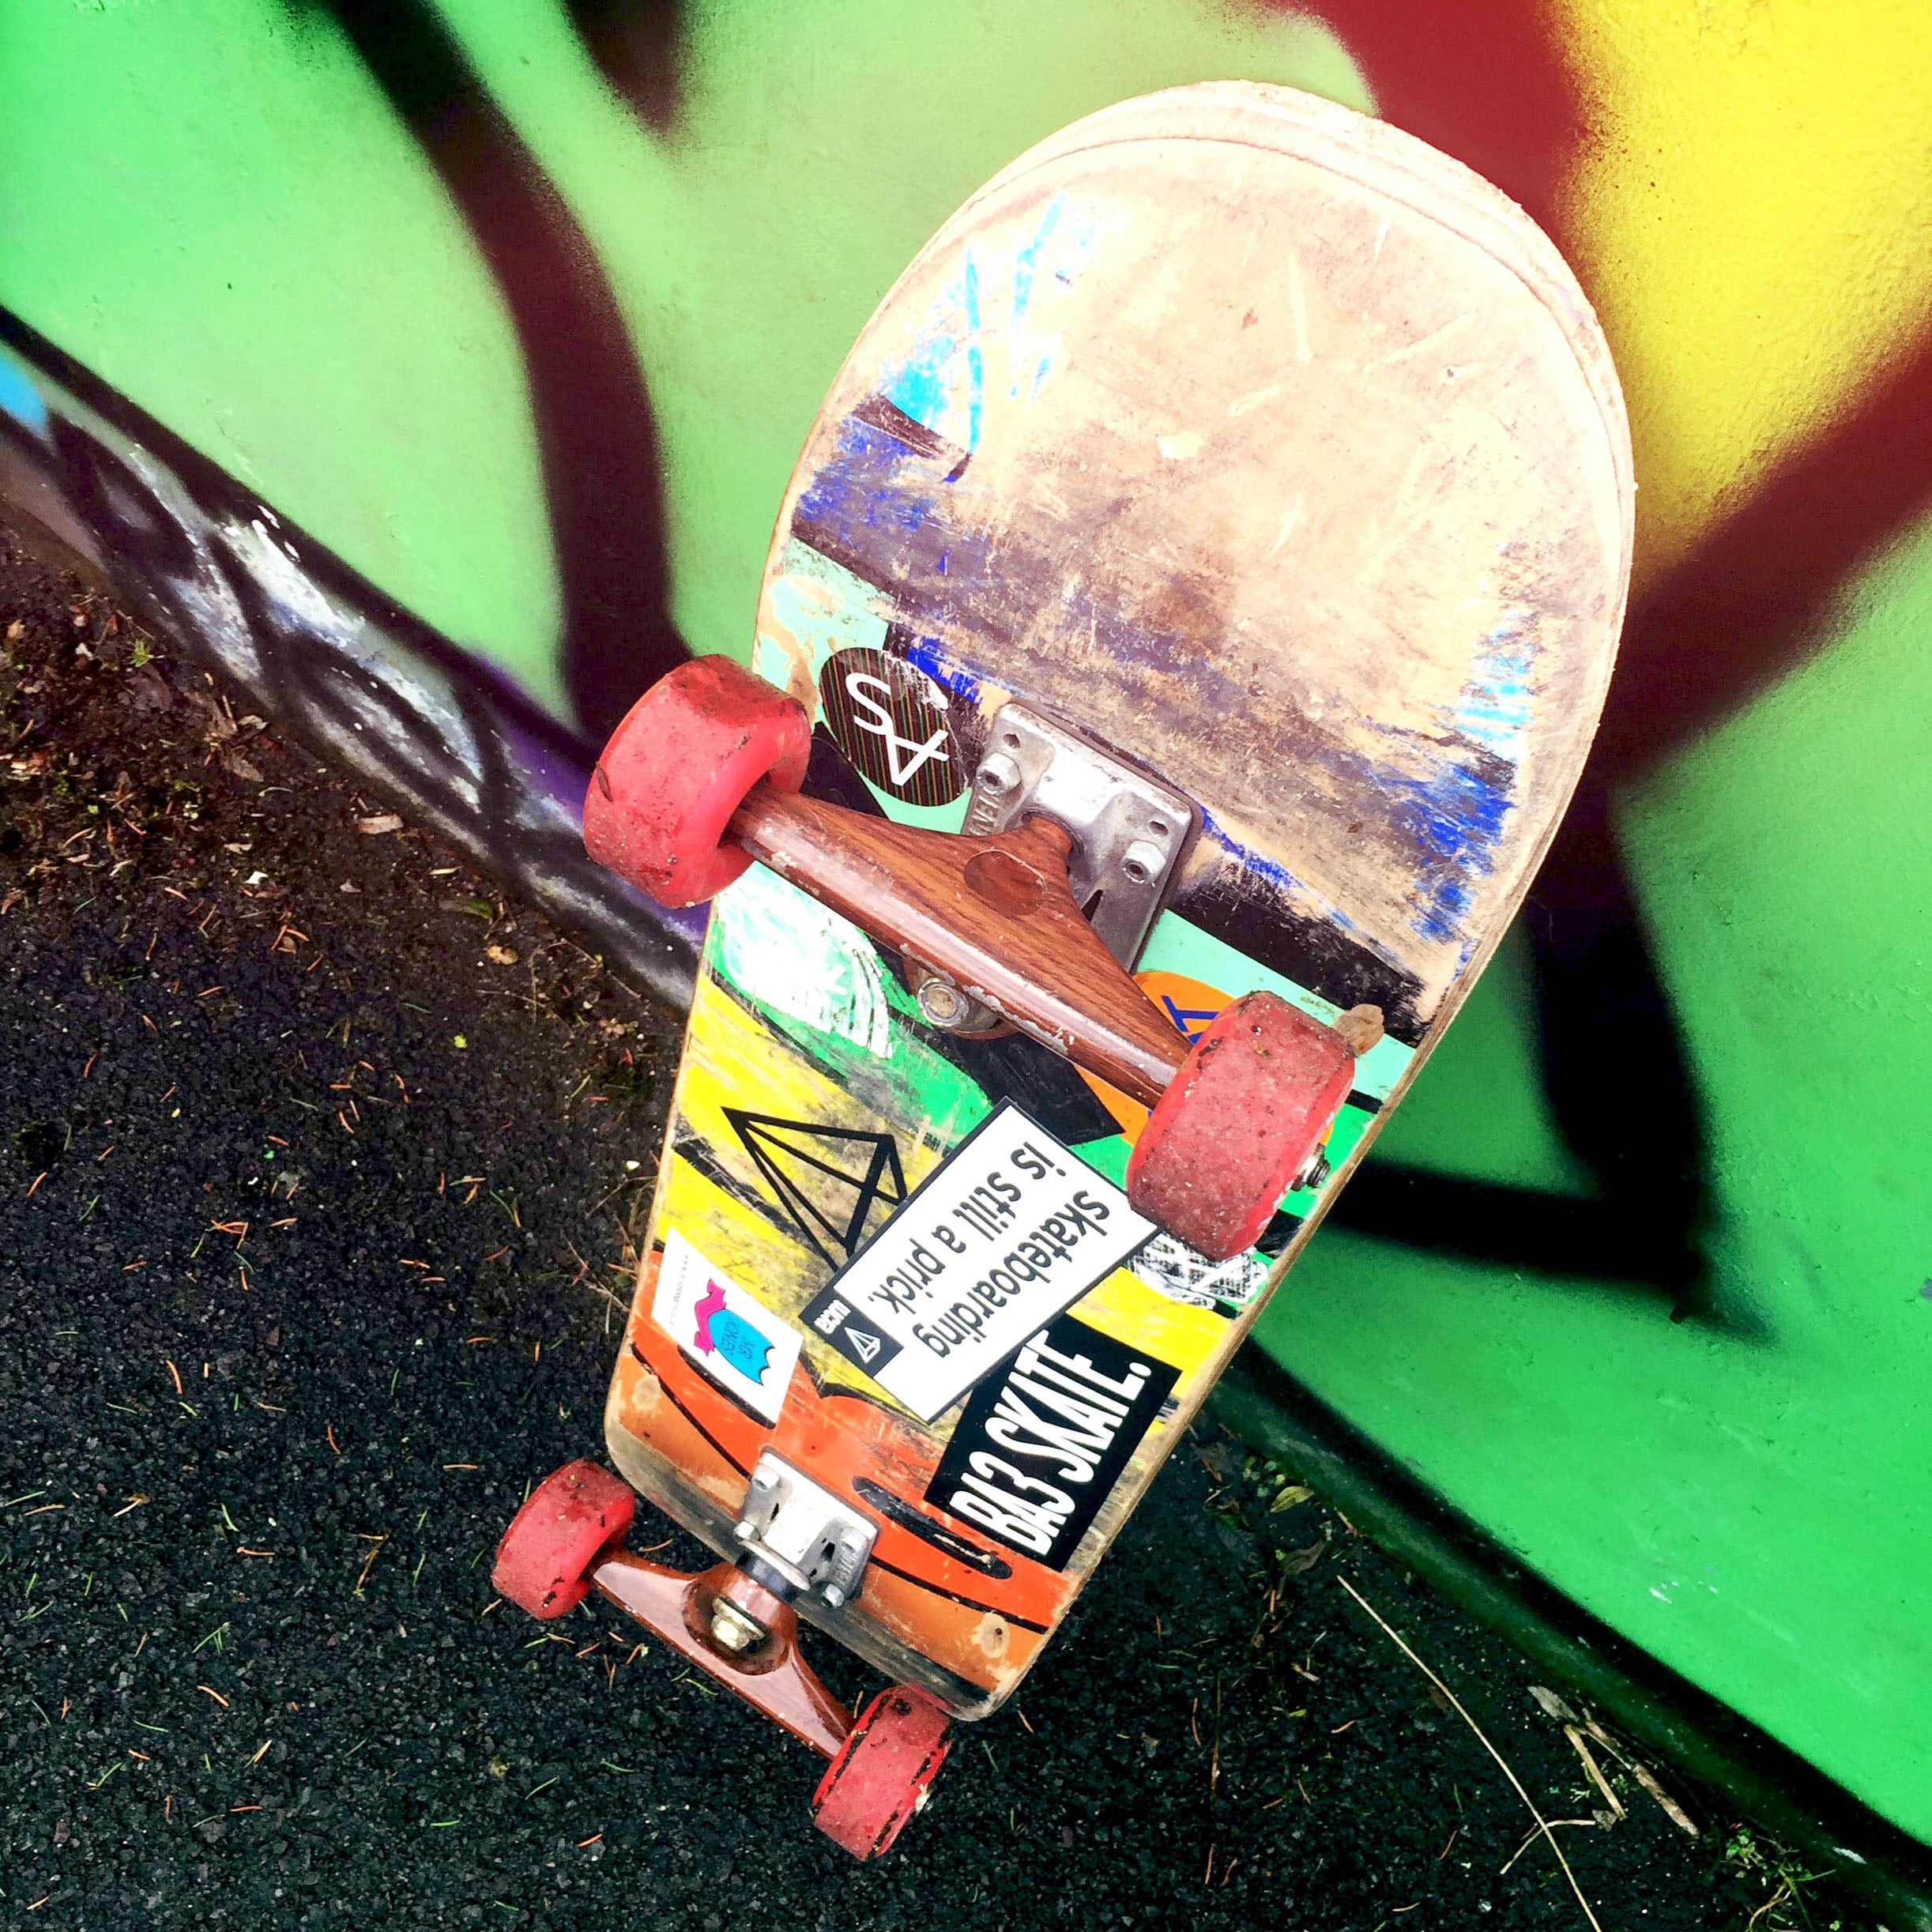 Worn skateboard with a couple skateboard sticker decals